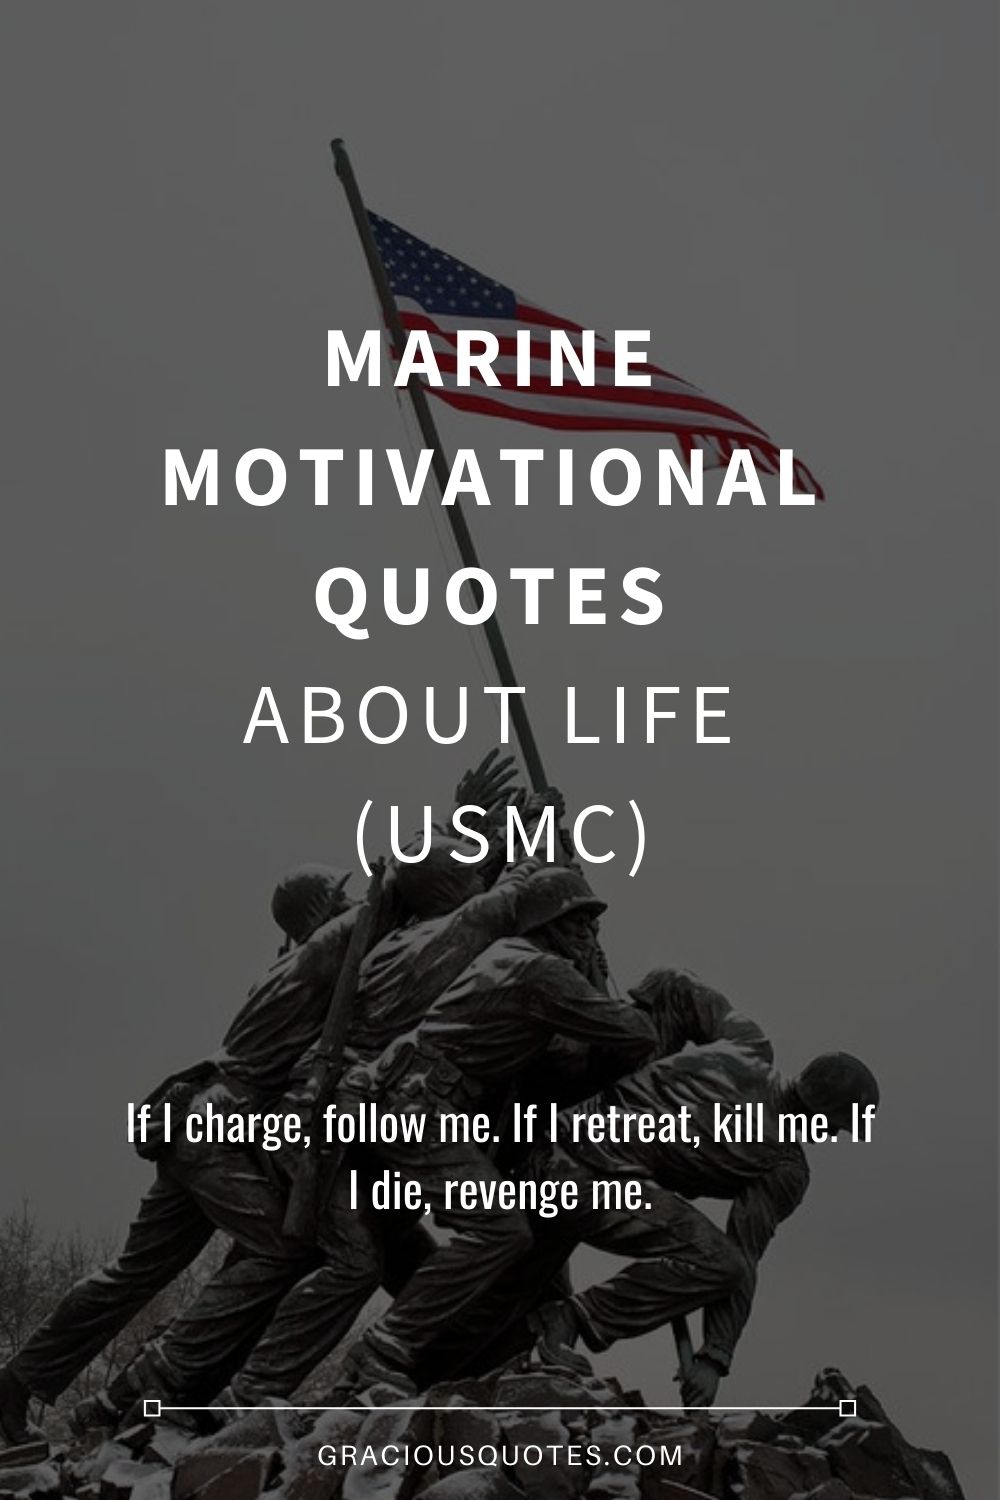 Marine Motivational Quotes About Life (USMC) - Gracious Quotes